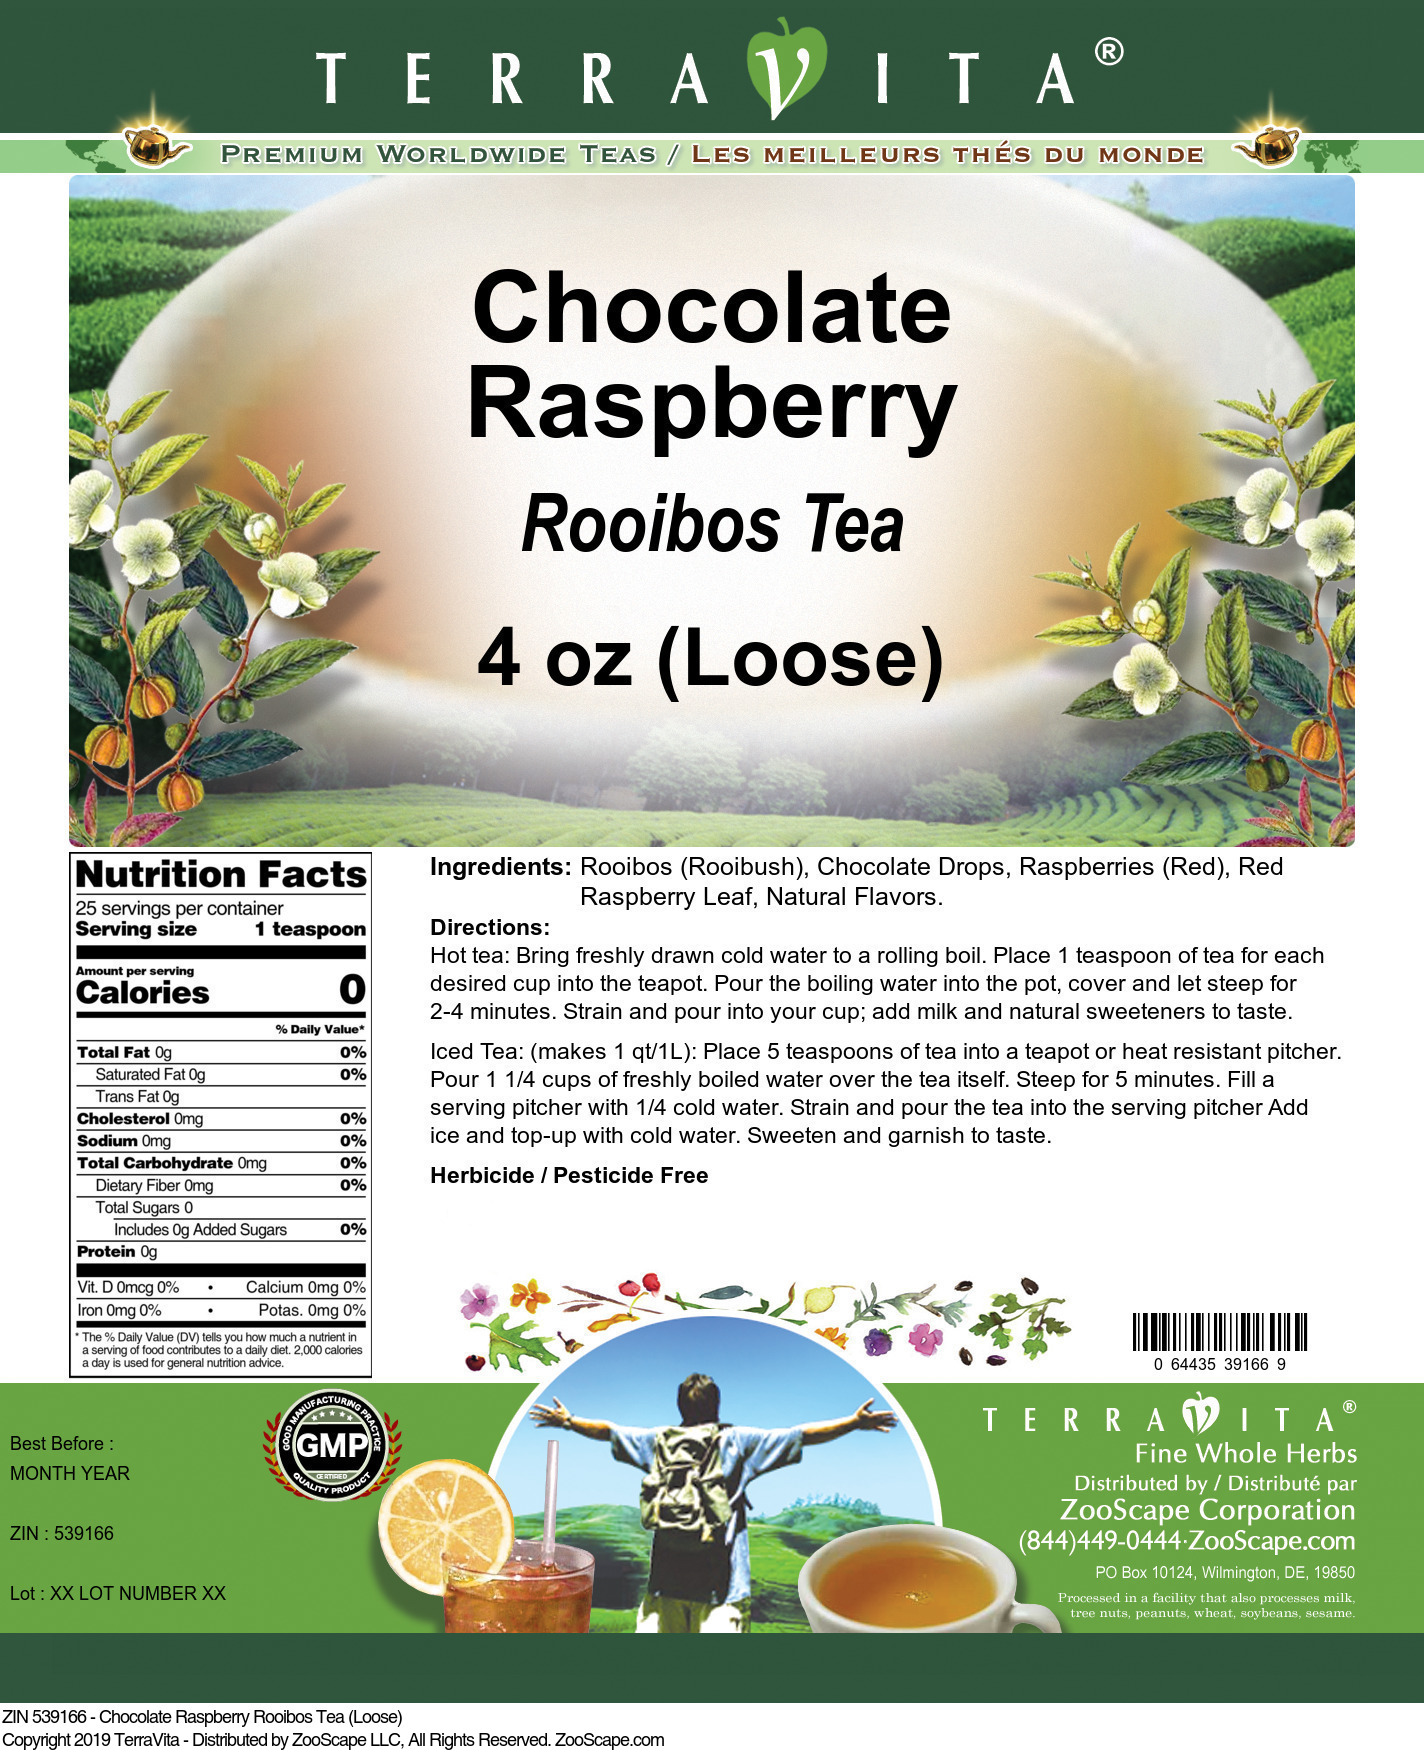 Chocolate Raspberry Rooibos Tea (Loose) - Label